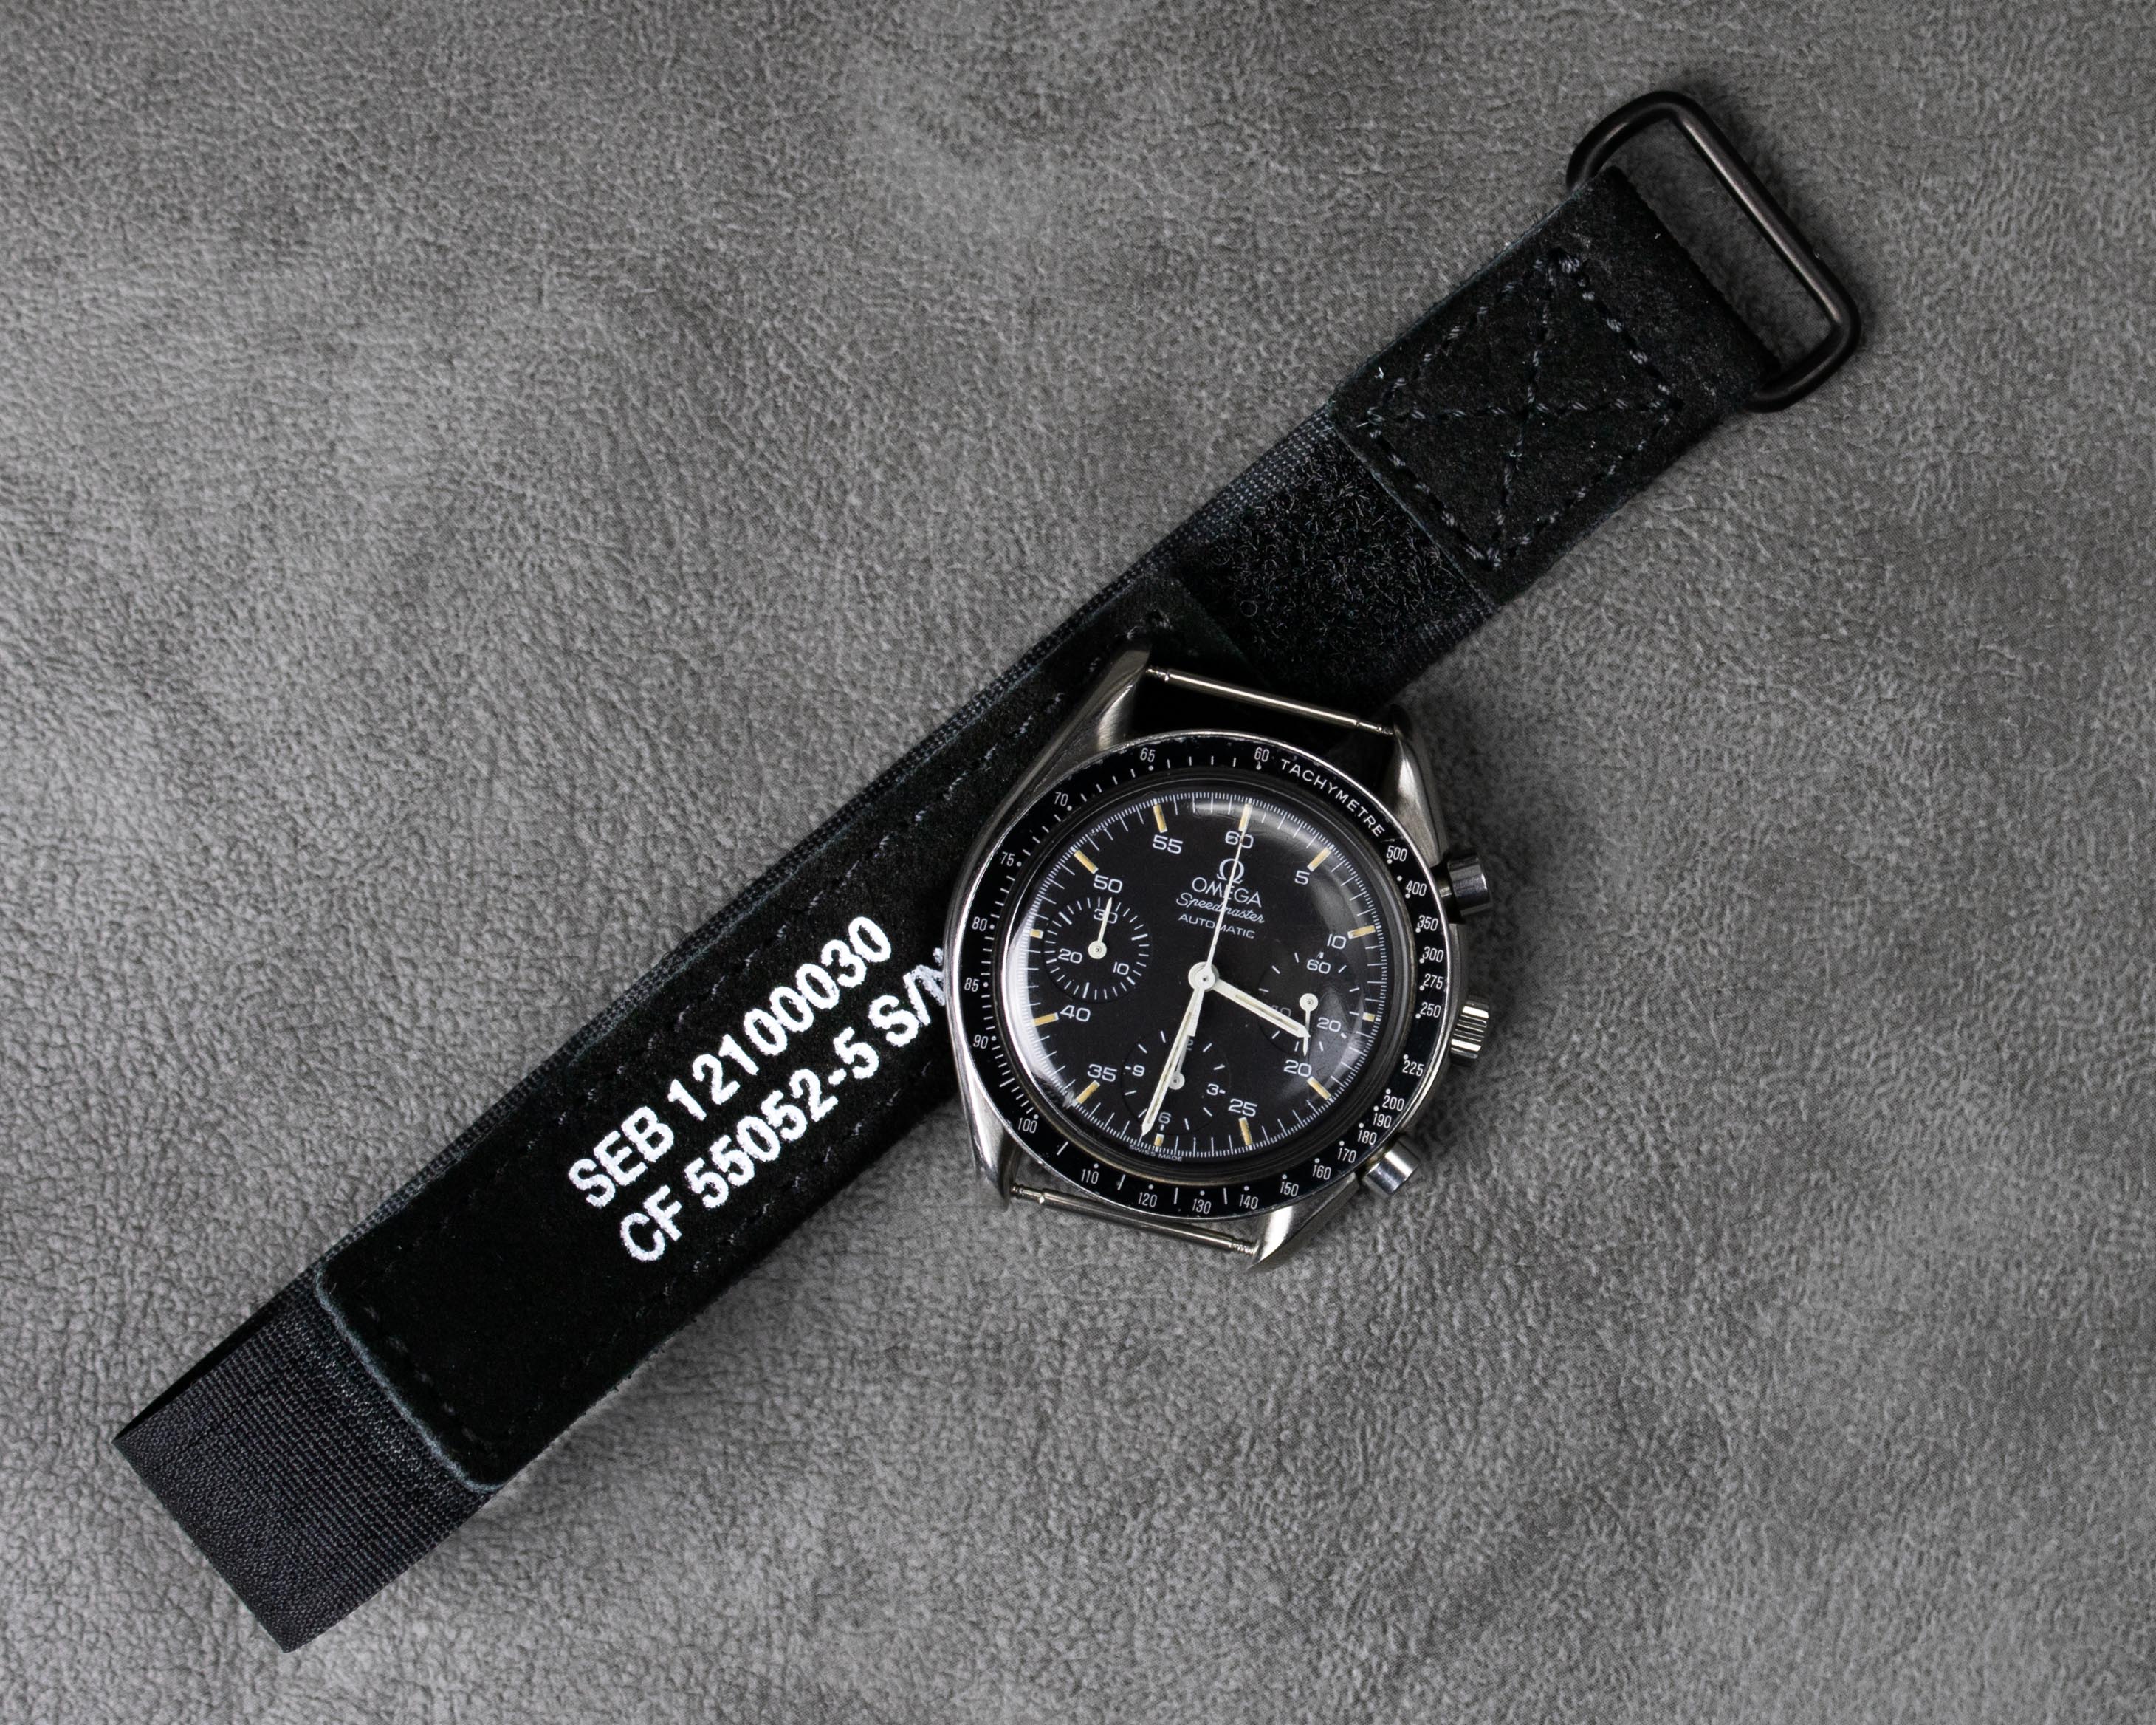 Black NASA velcro watch strap with a Omega Speedmaster